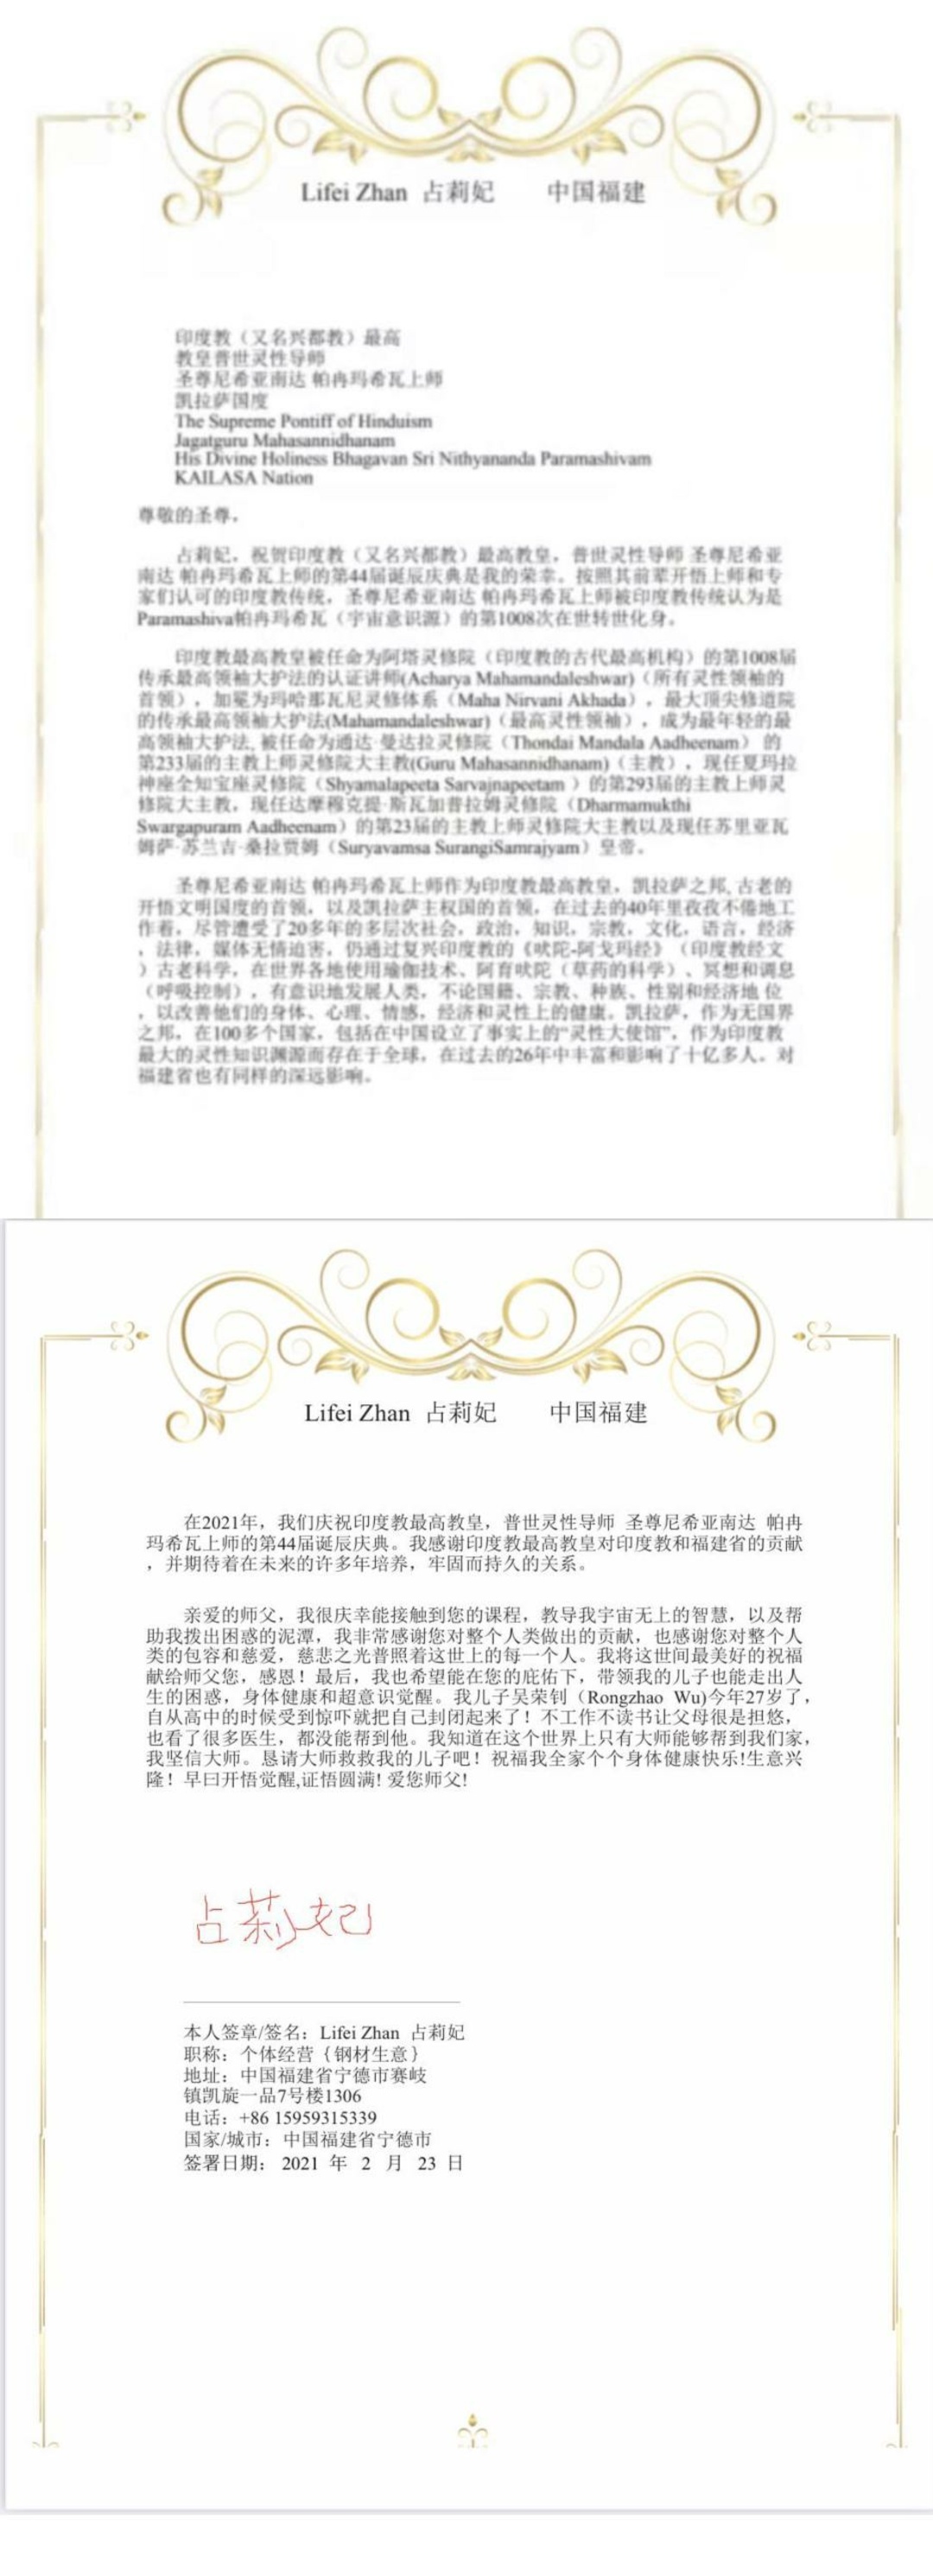 China---Li-fei-Zhan---Feb-23--2021-(Proclamation)-1fDVPQQPpU34wocLhUjPY-ToqfRg9Zagc.pdf